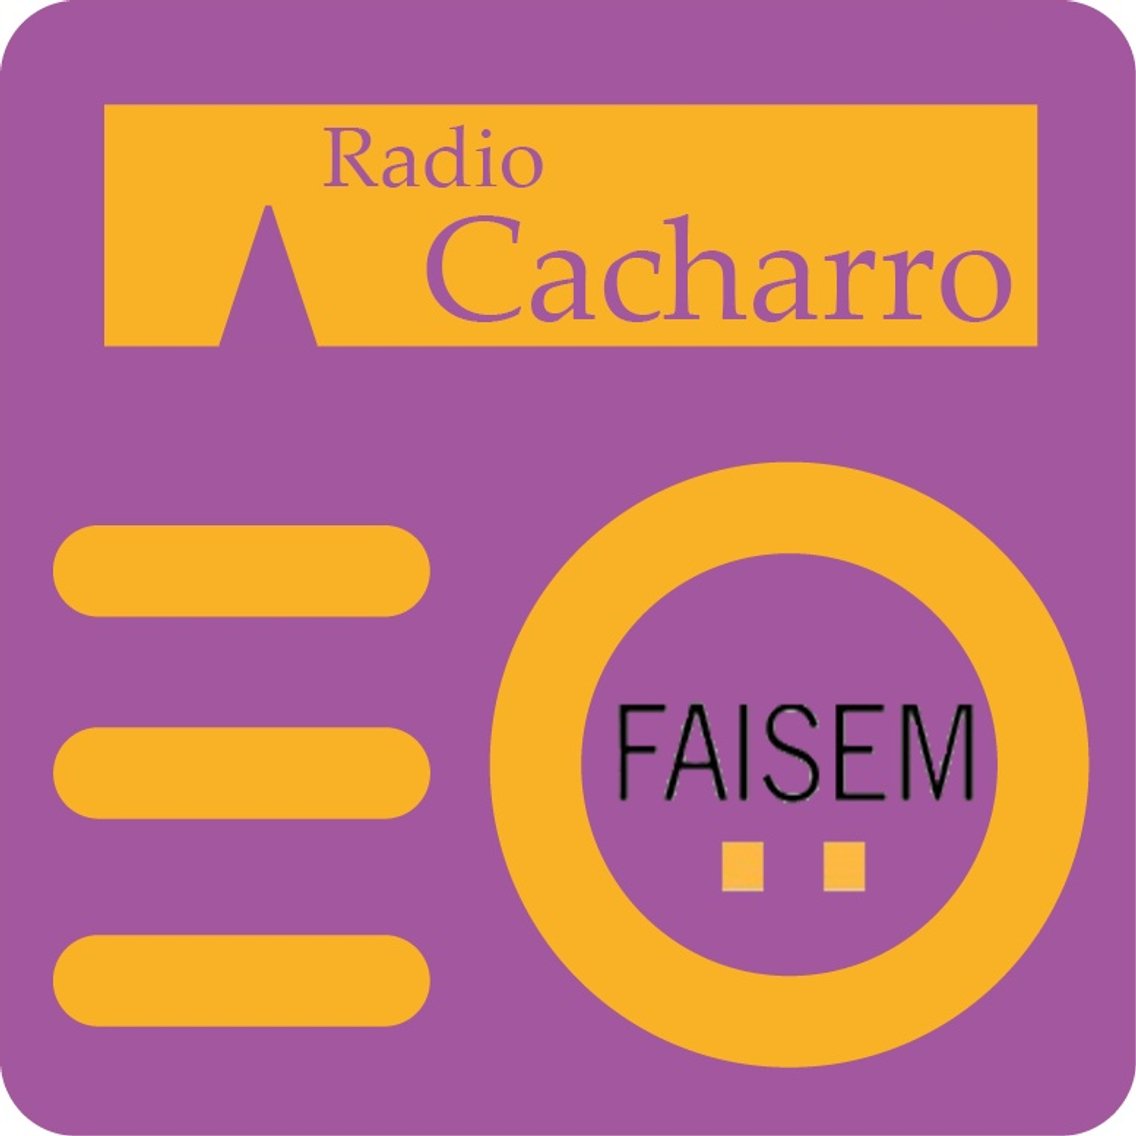 Radio Cacharro - Cover Image